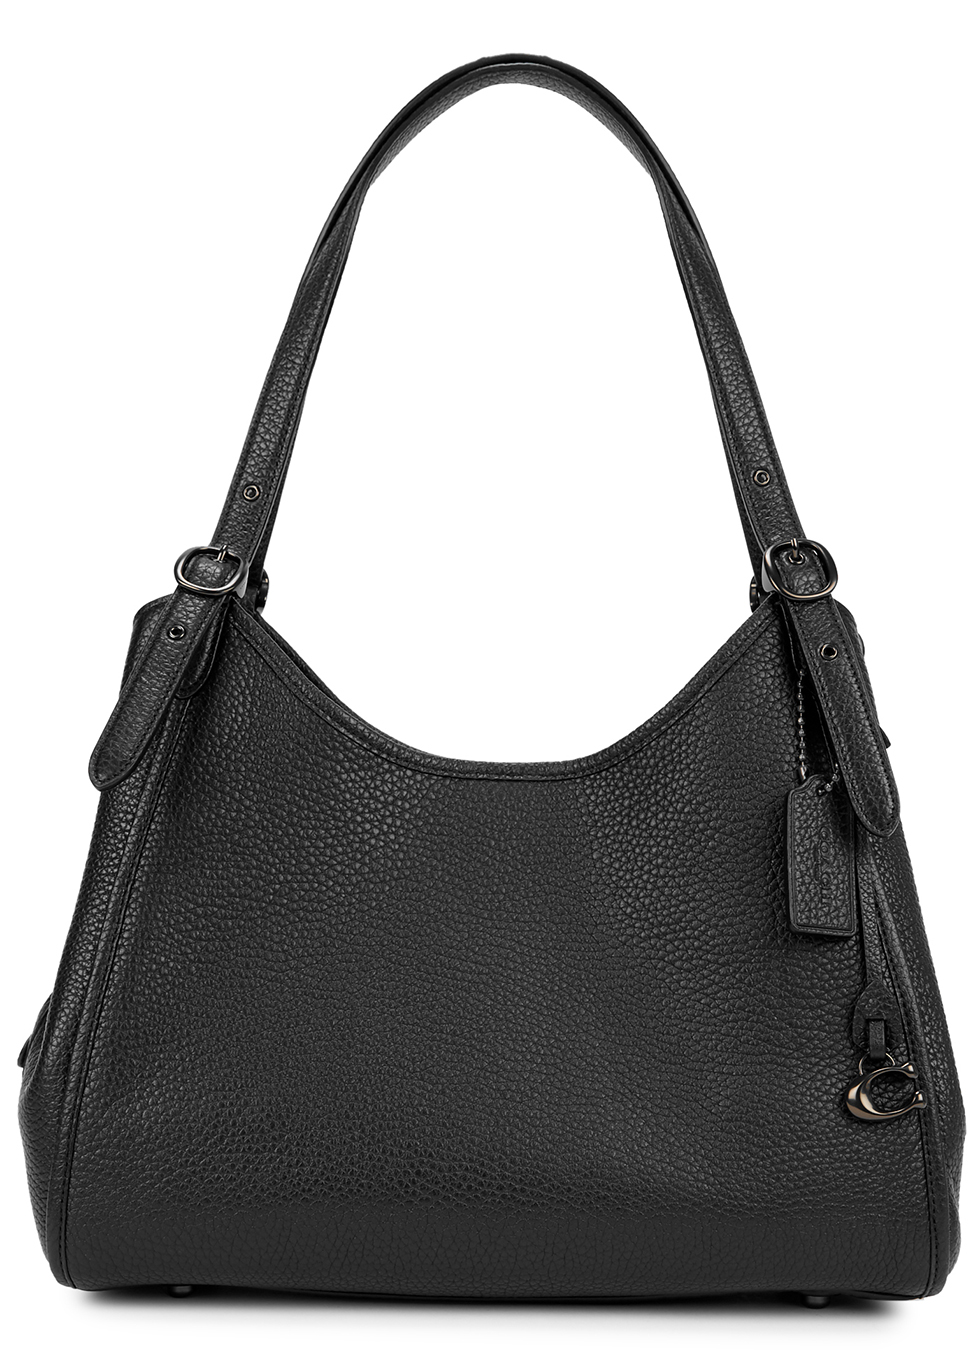 Lori black leather shoulder bag